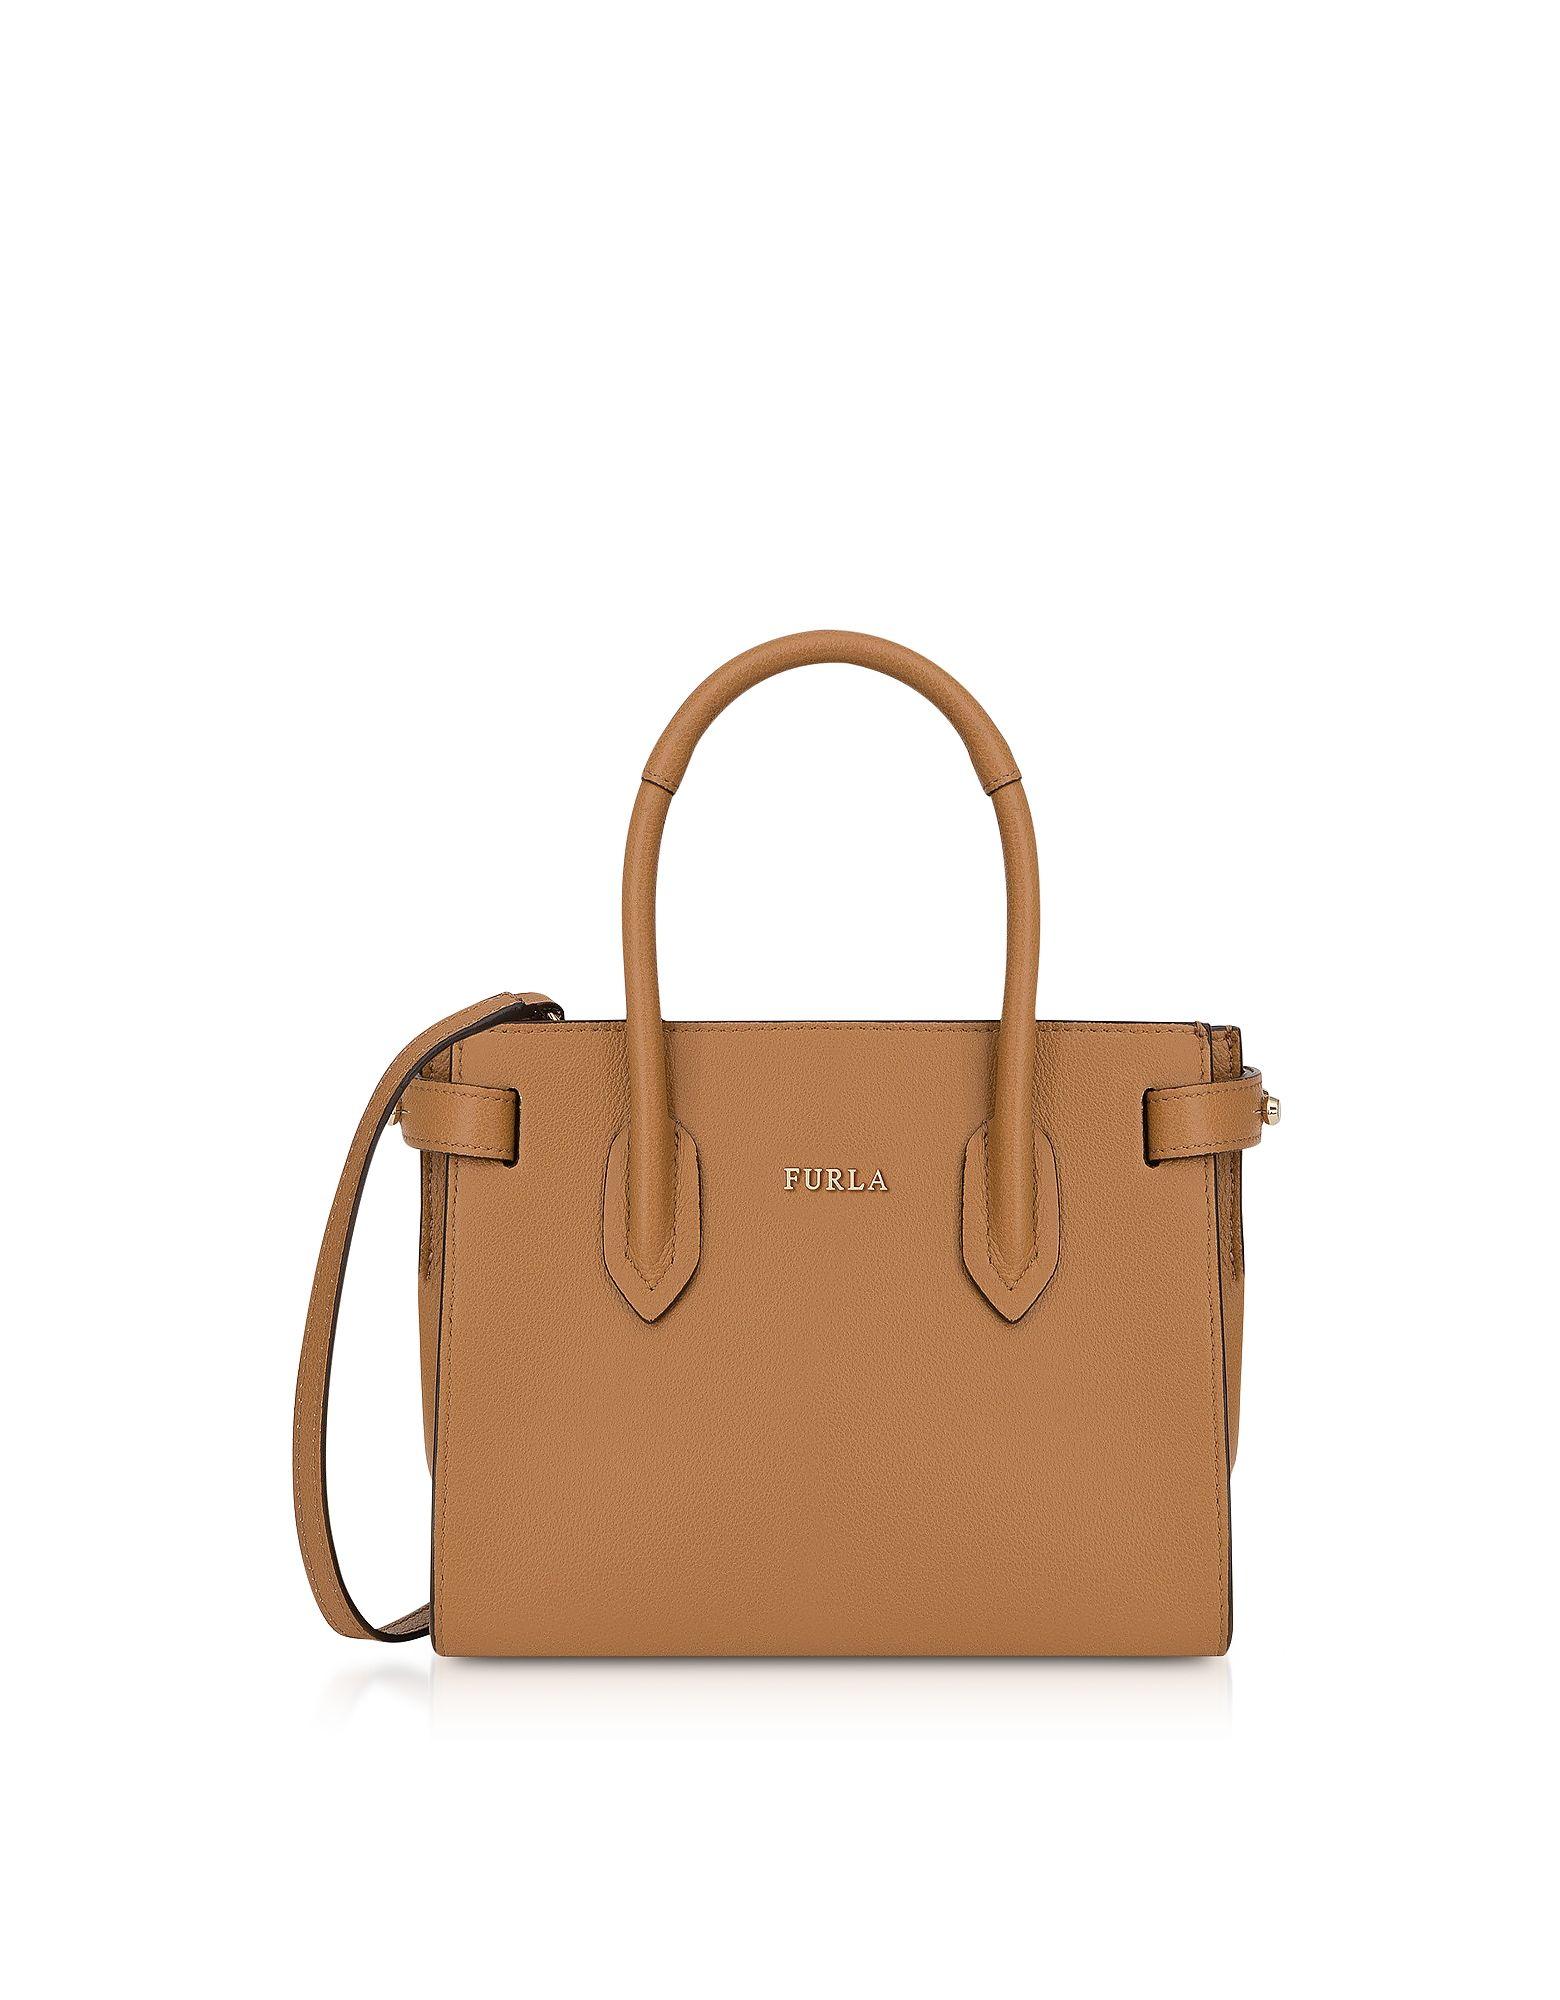 Furla Brown Leather Handbag in Brown - Lyst